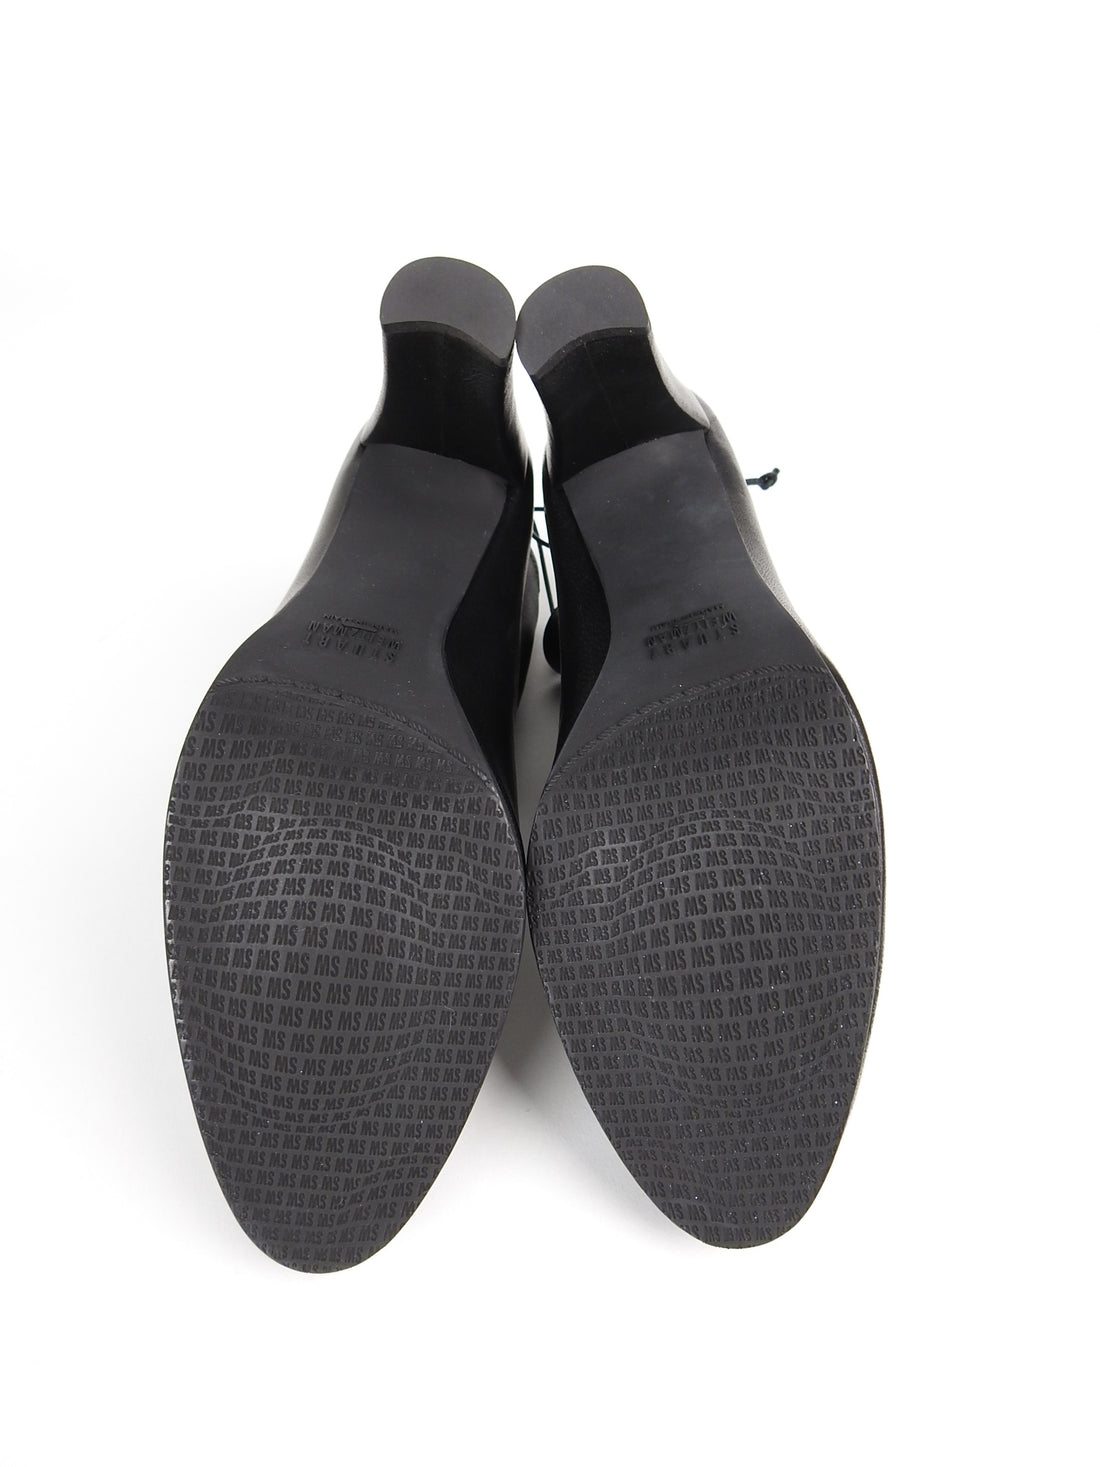 Stuart Weitzman Black Leather Mitten Ankle Boots - USA 8.5